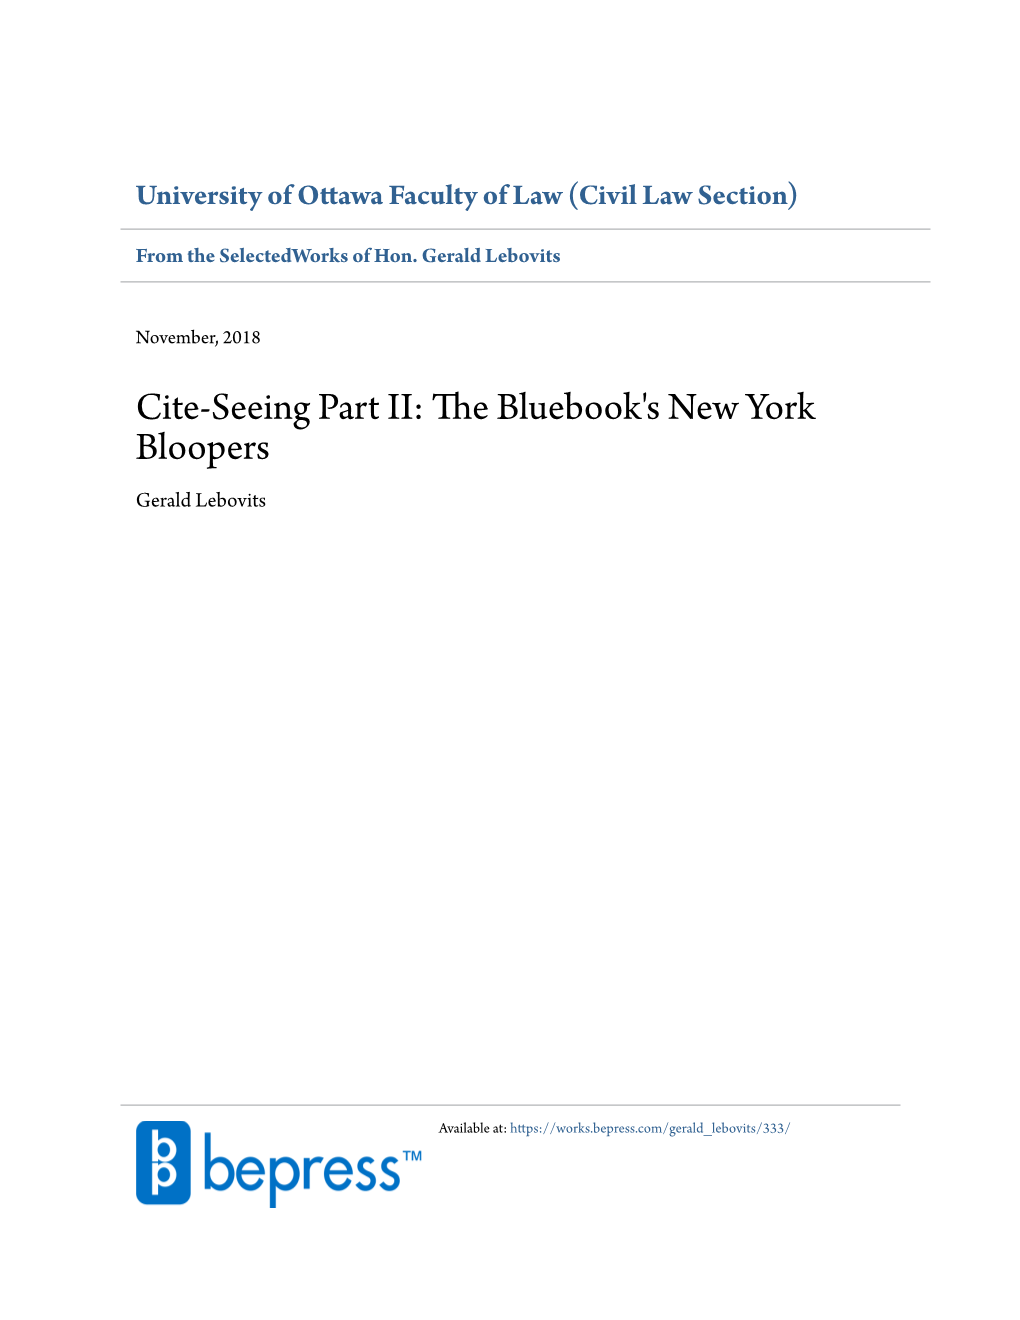 Cite-Seeing Part II: the Bluebook's New York Bloopers